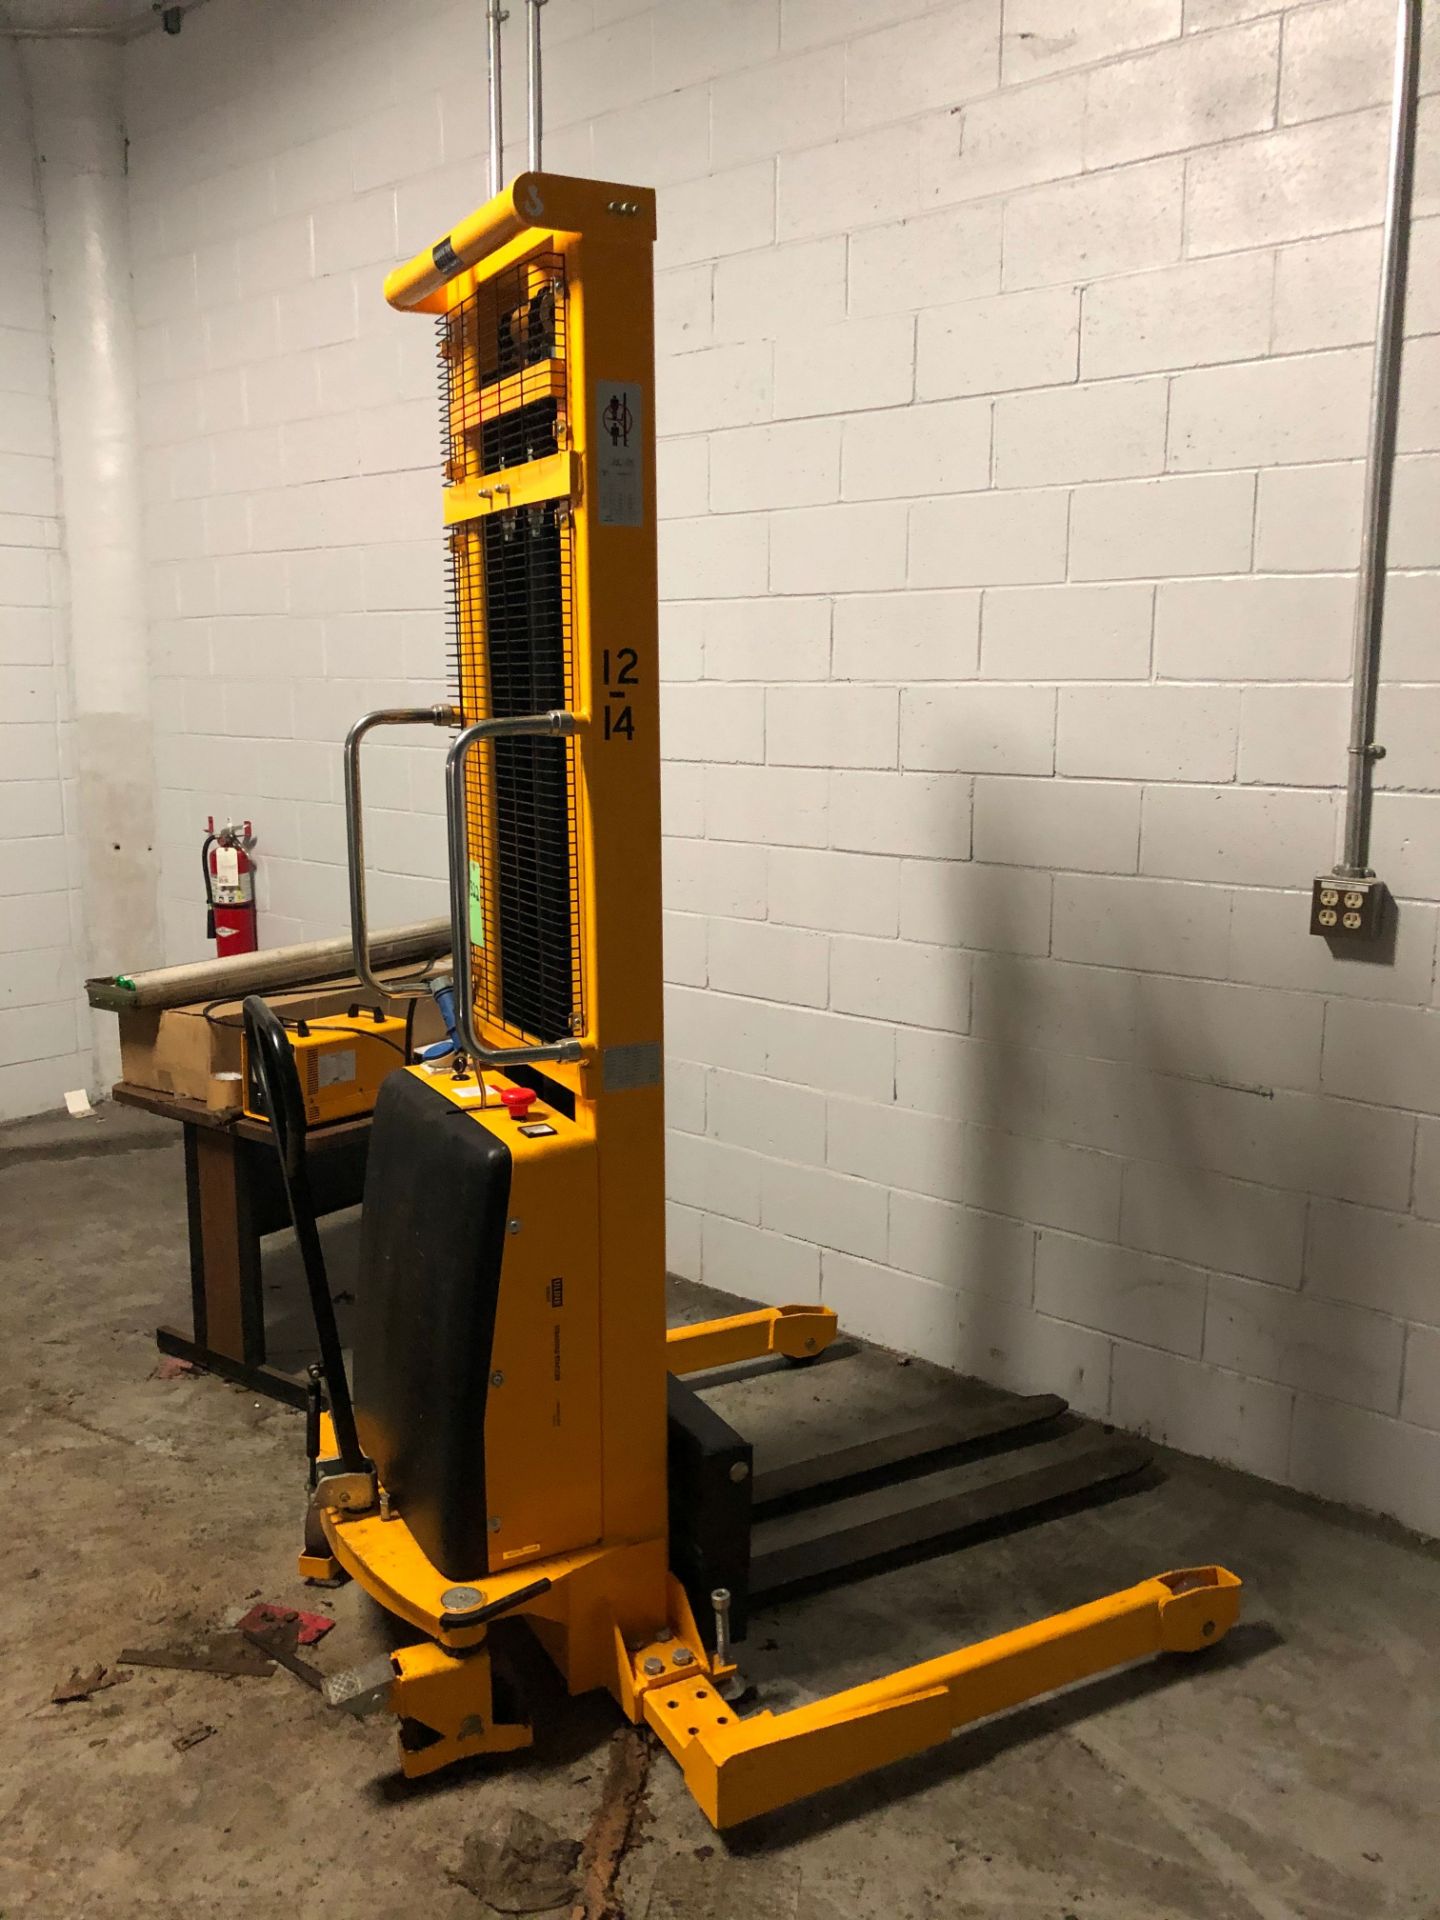 2200 lb electric pallet lift - Image 3 of 4